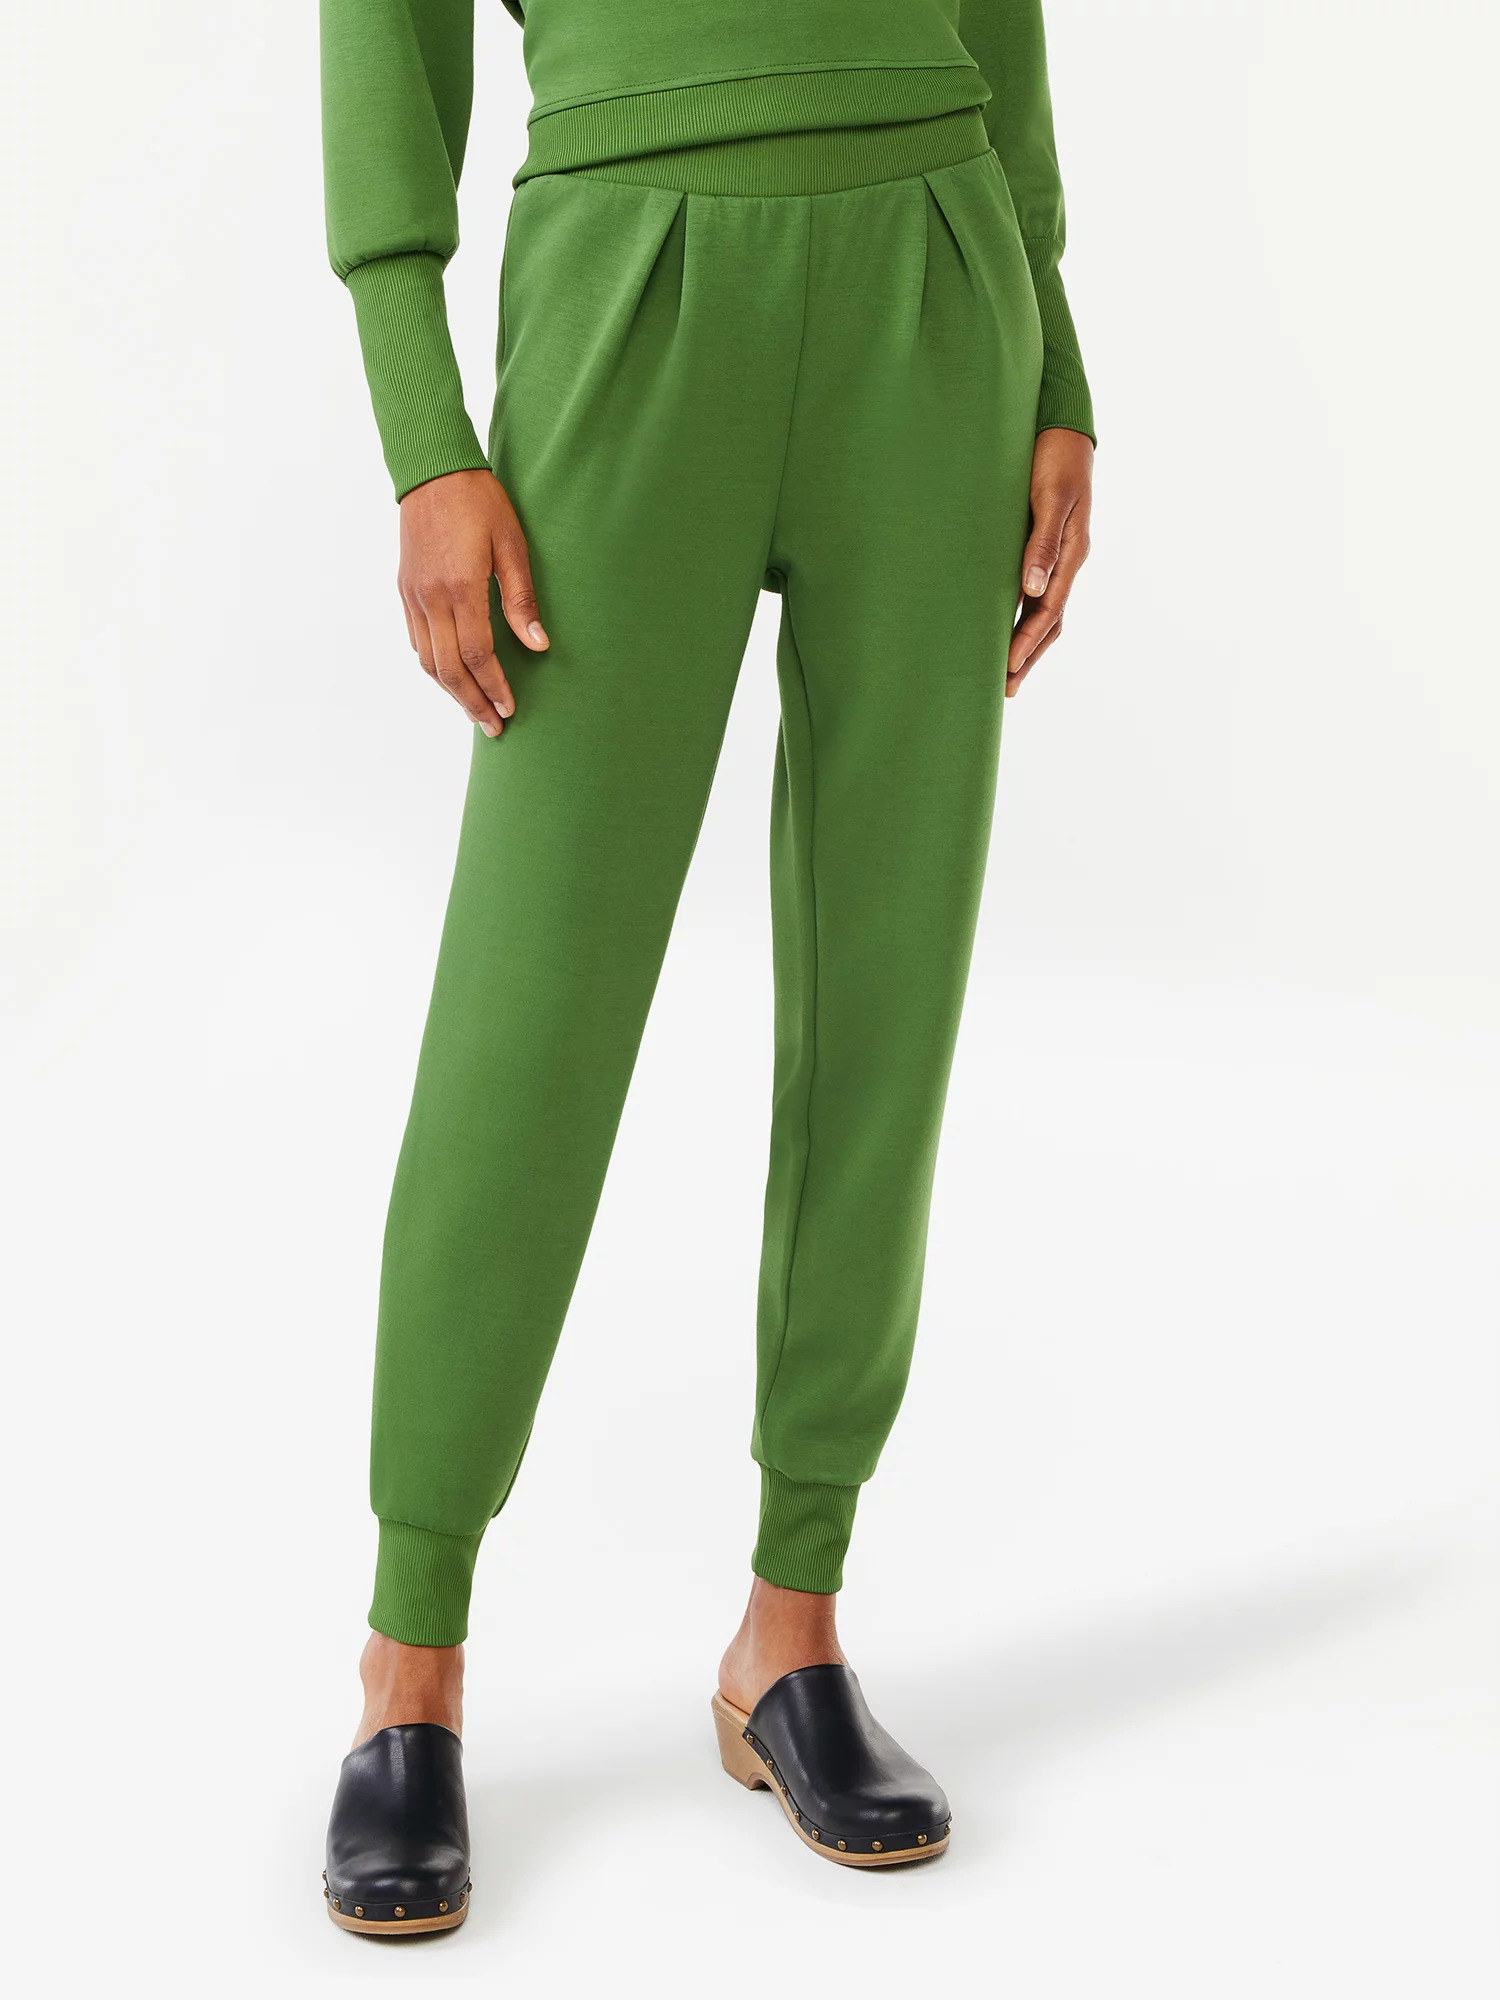 Model wearing the banana palm green pants